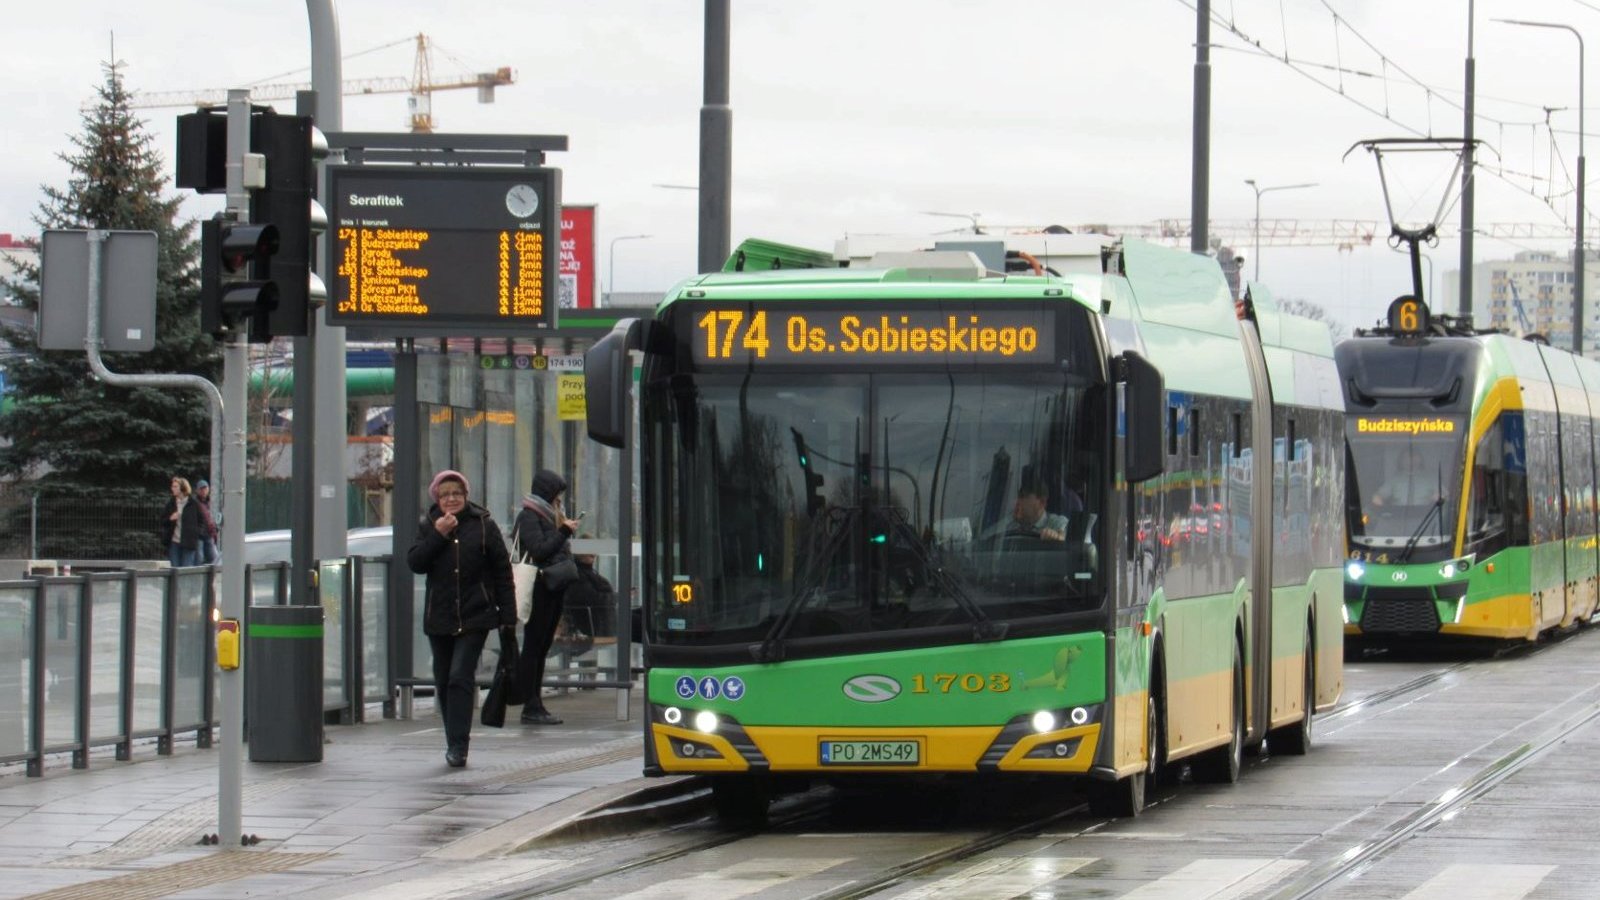 Autobus i tramwaj na przystanku podwójnym "Serafitek"